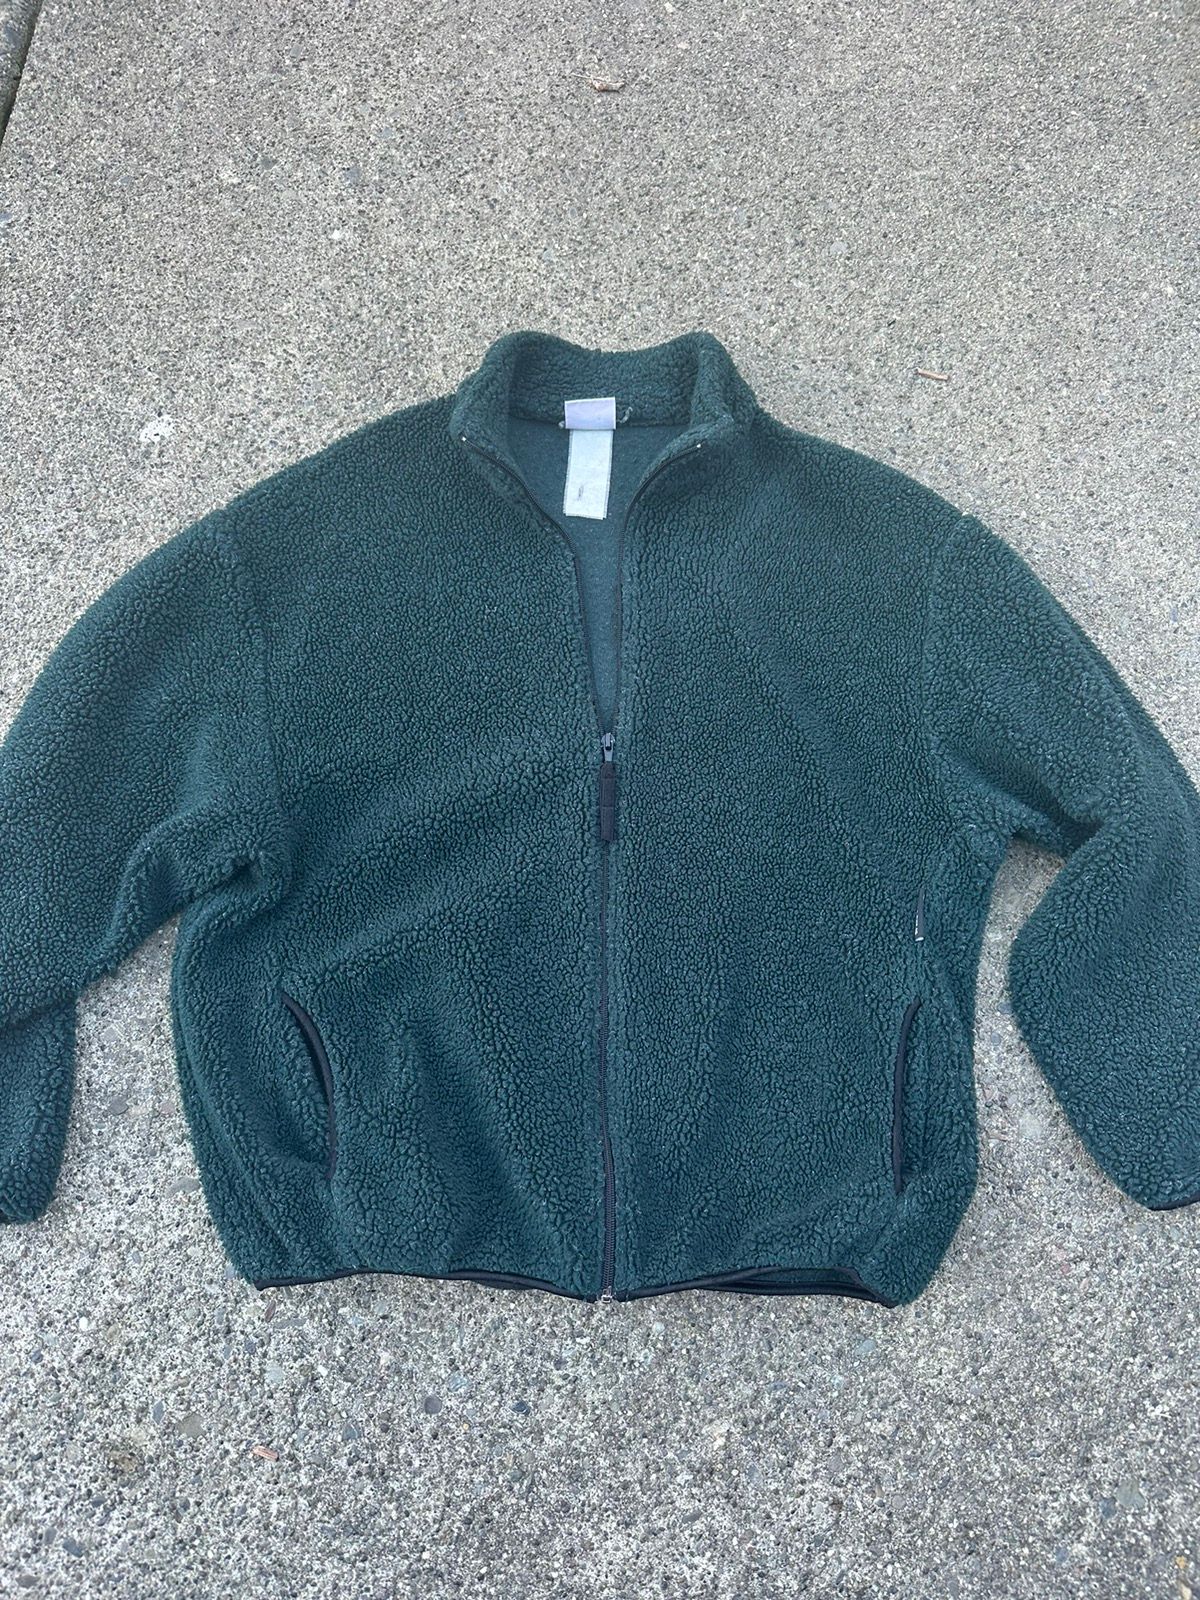 Vintage Vintage Speedo Fleece Jacket- Made in USA Forrest Green Size US M / EU 48-50 / 2 - 1 Preview